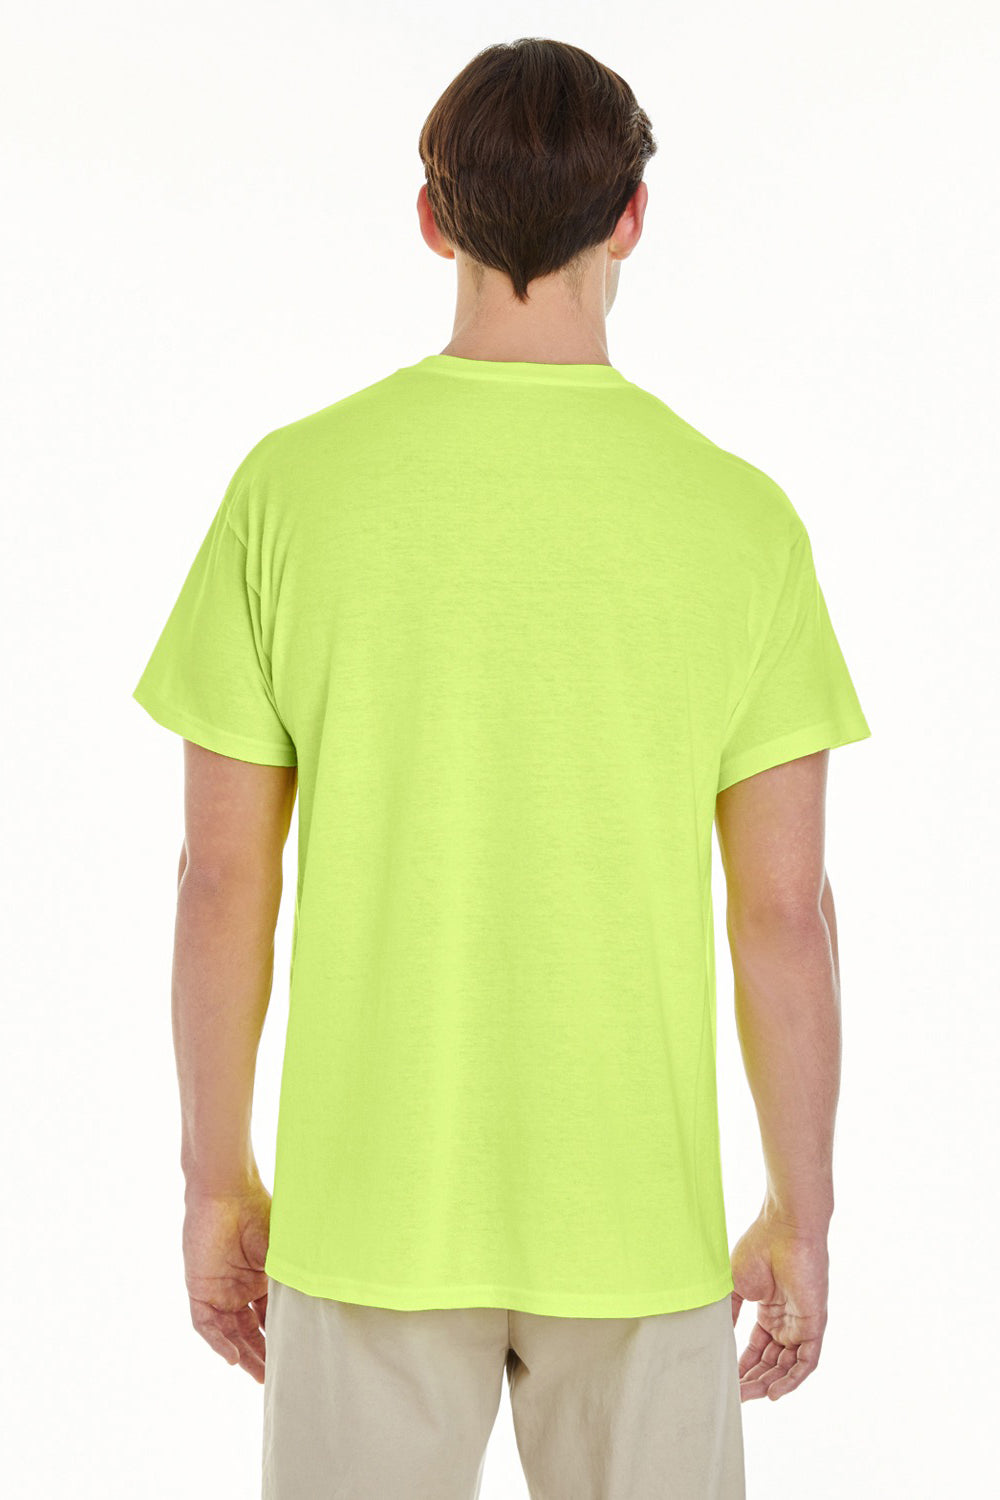 Gildan G530 Mens Short Sleeve Crewneck T-Shirt w/ Pocket Safety Green Back